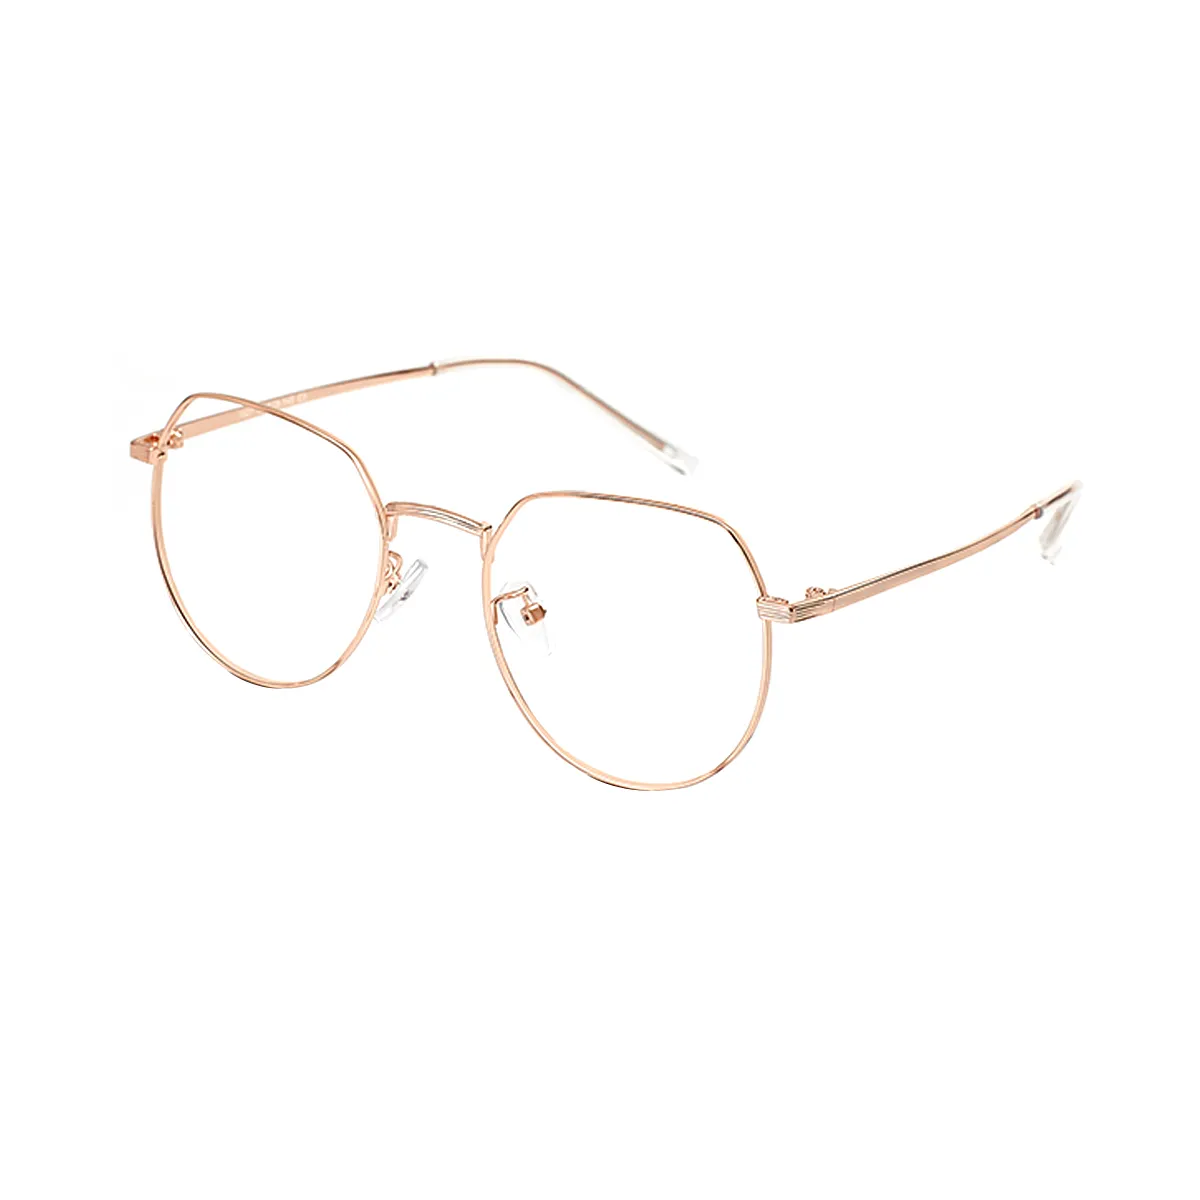 Izabel - Oval Rose-Gold Glasses for Women